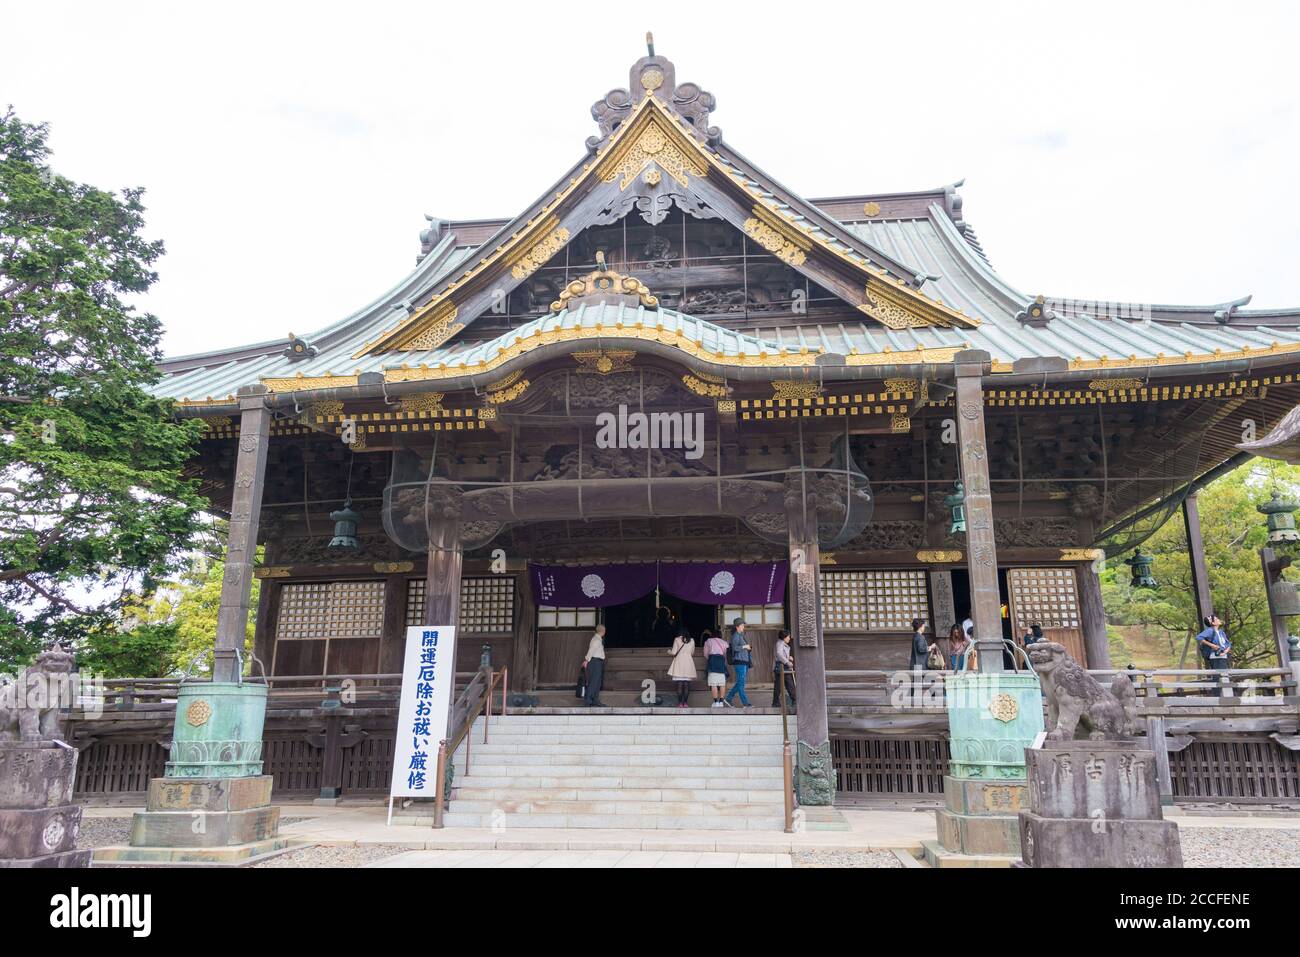 Chiba, Japan - Narita-san Shinsho-ji Temple in Narita, Chiba, Japan. The Temple was originally founded in 940. Stock Photo